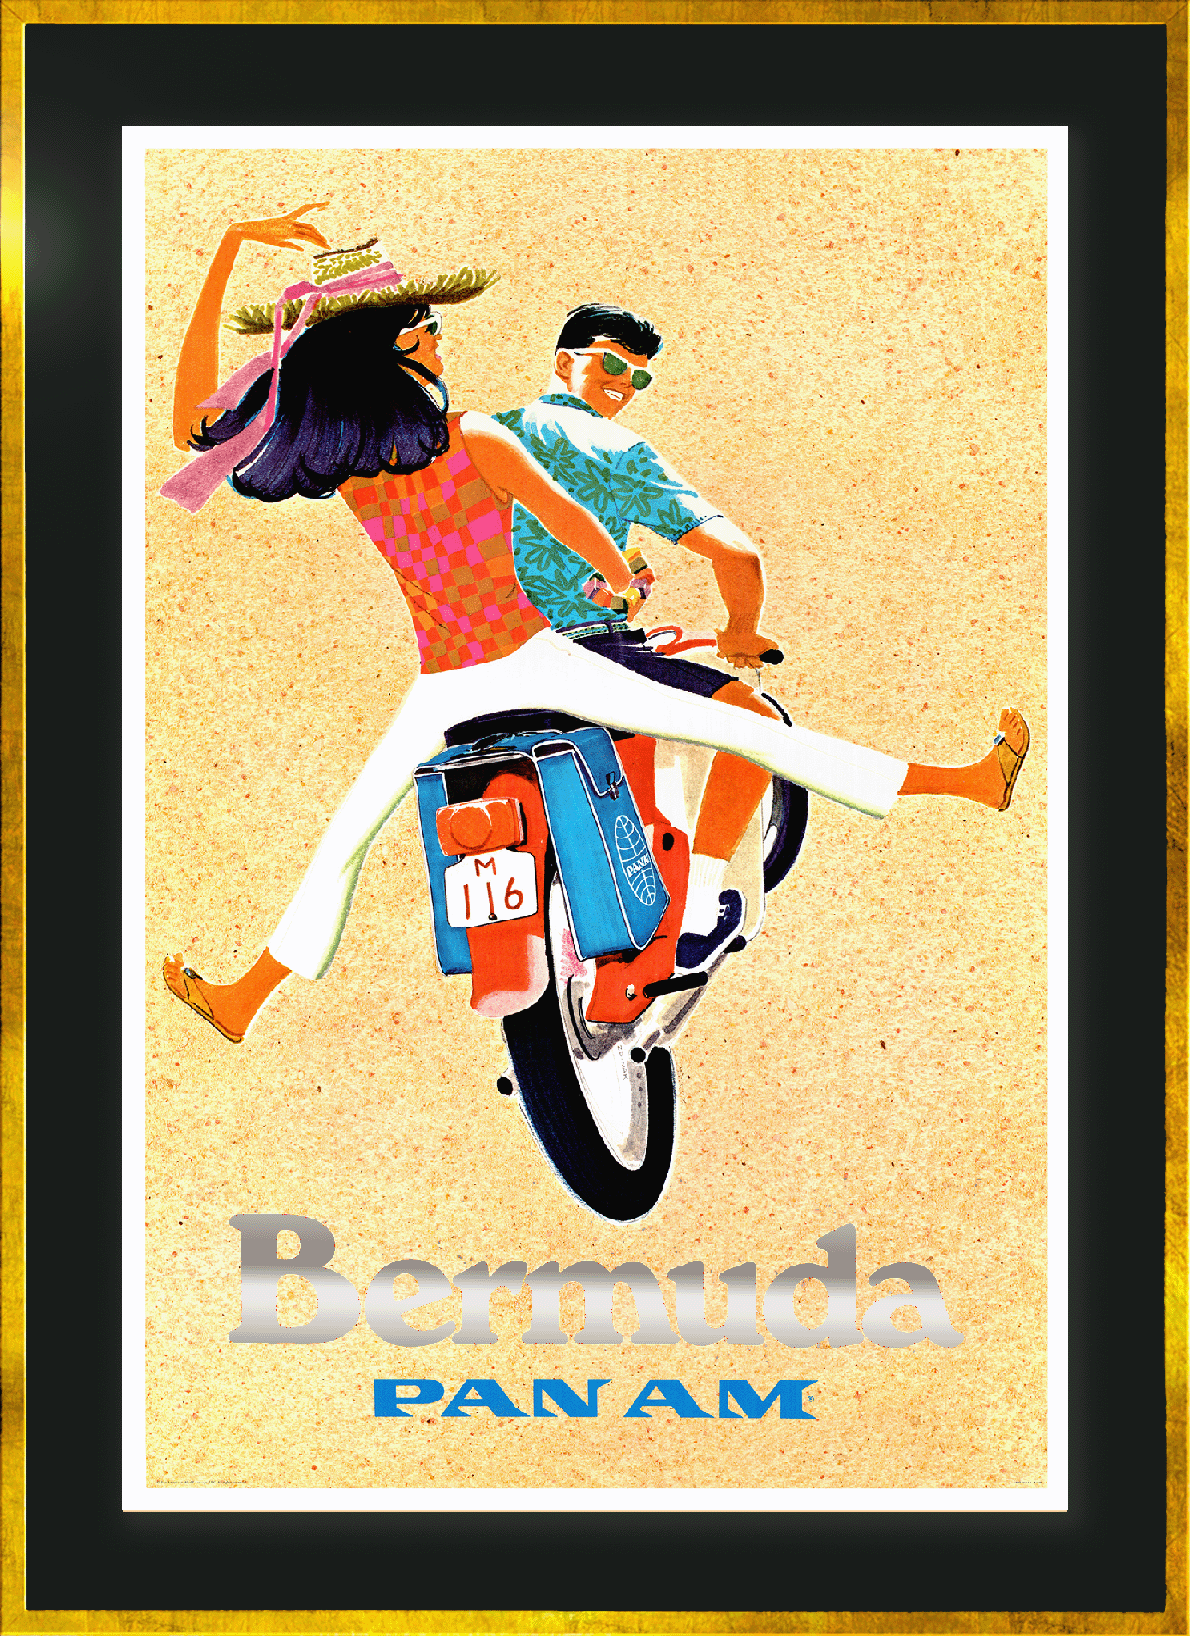 Bermuda, Pan Am, 1960s [Scooter riders].